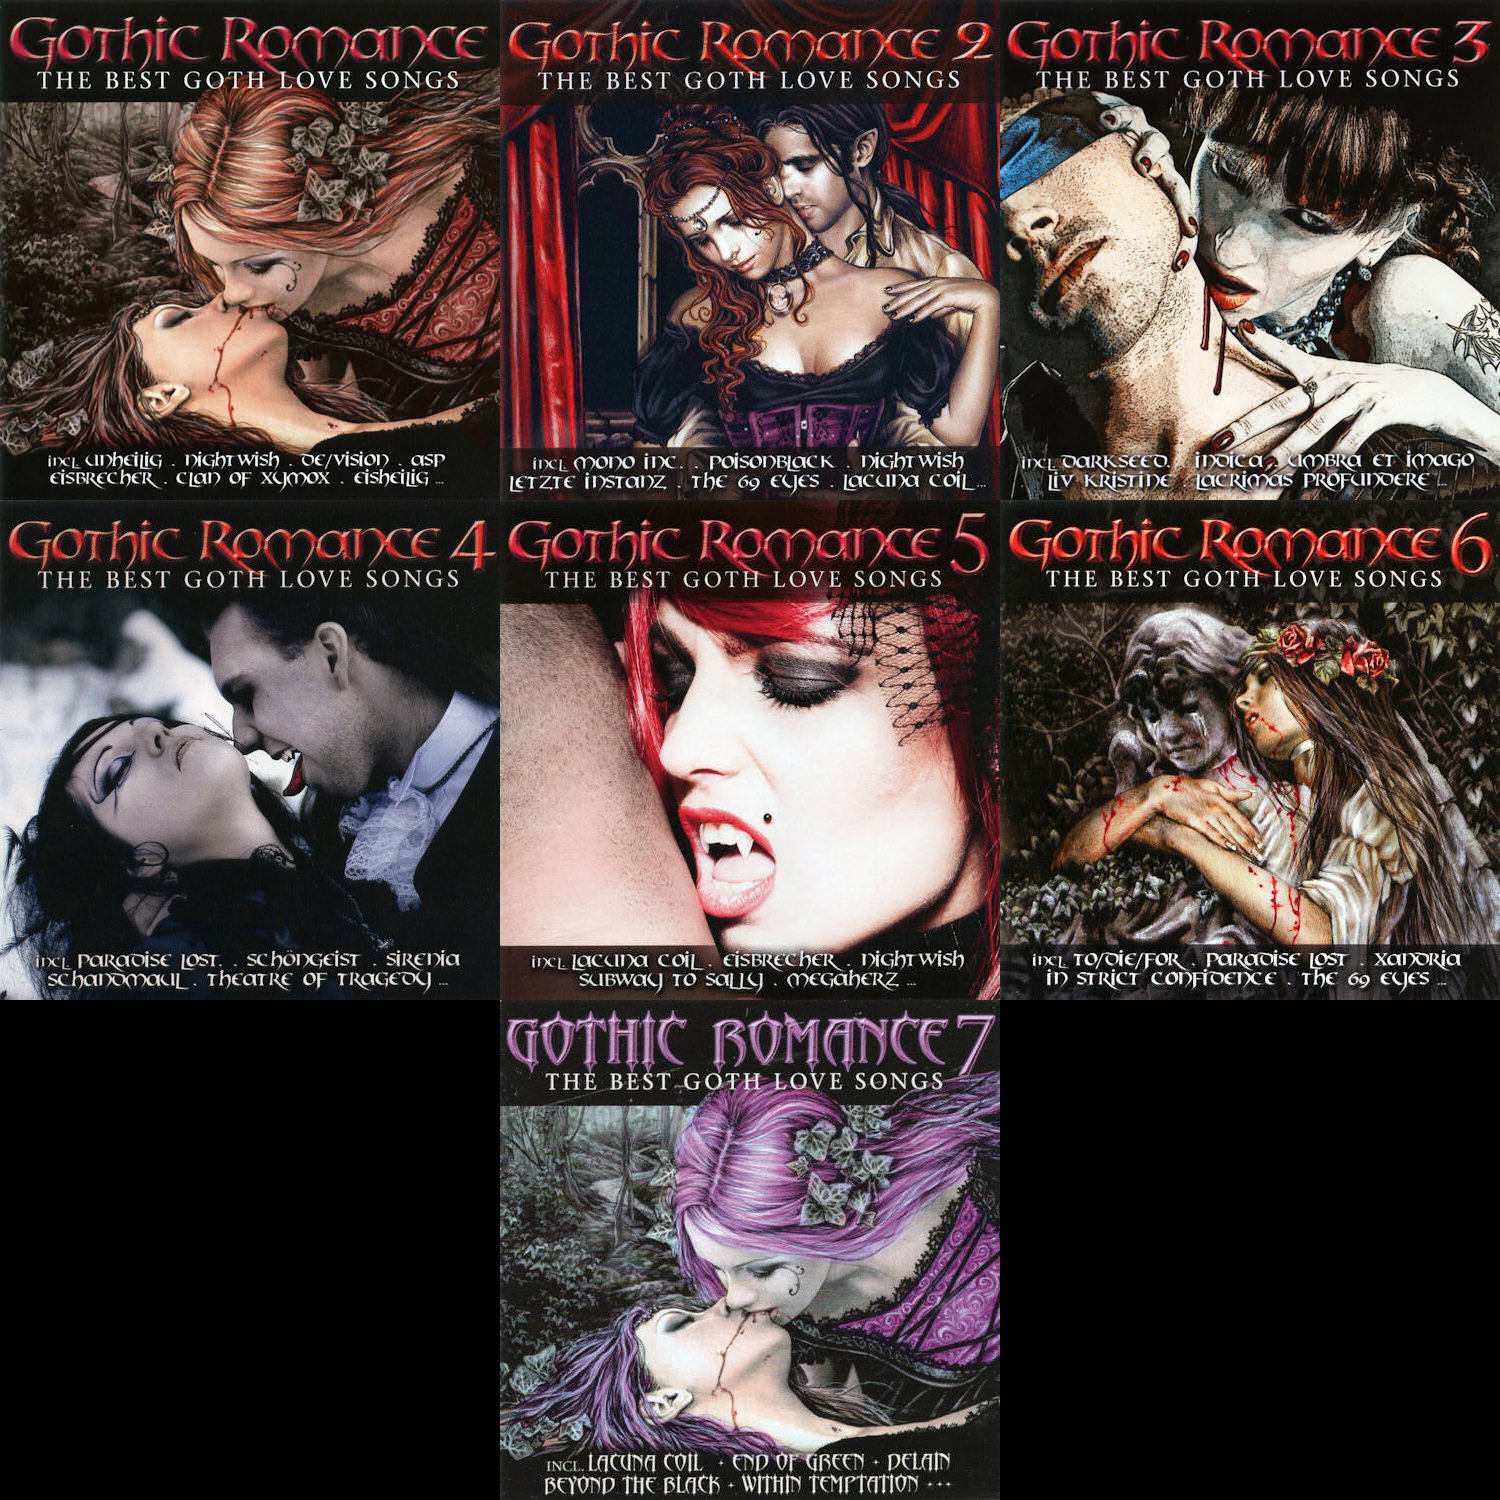 VA - Gothic Romance (The Best Goth Love Songs) Vol.1 - Vol.7 (2009-2019) MP...